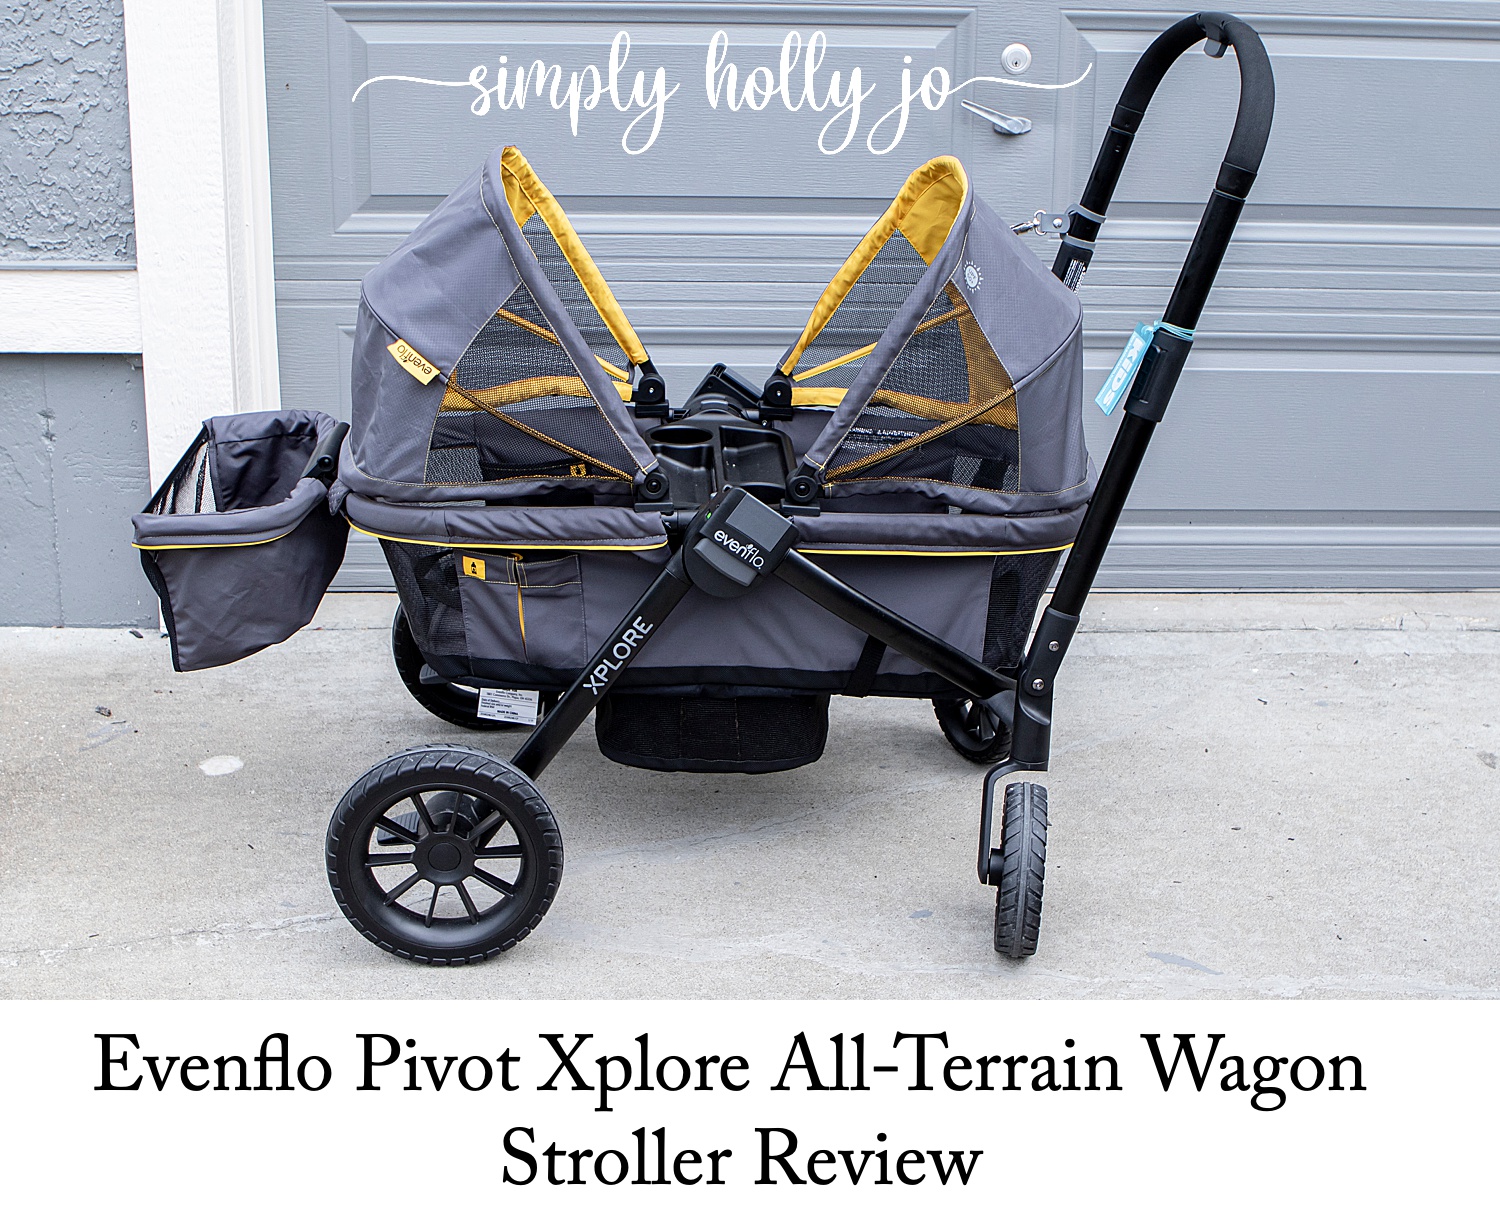 Evenflo Pivot Xplore All-Terrain Wagon Stroller Review